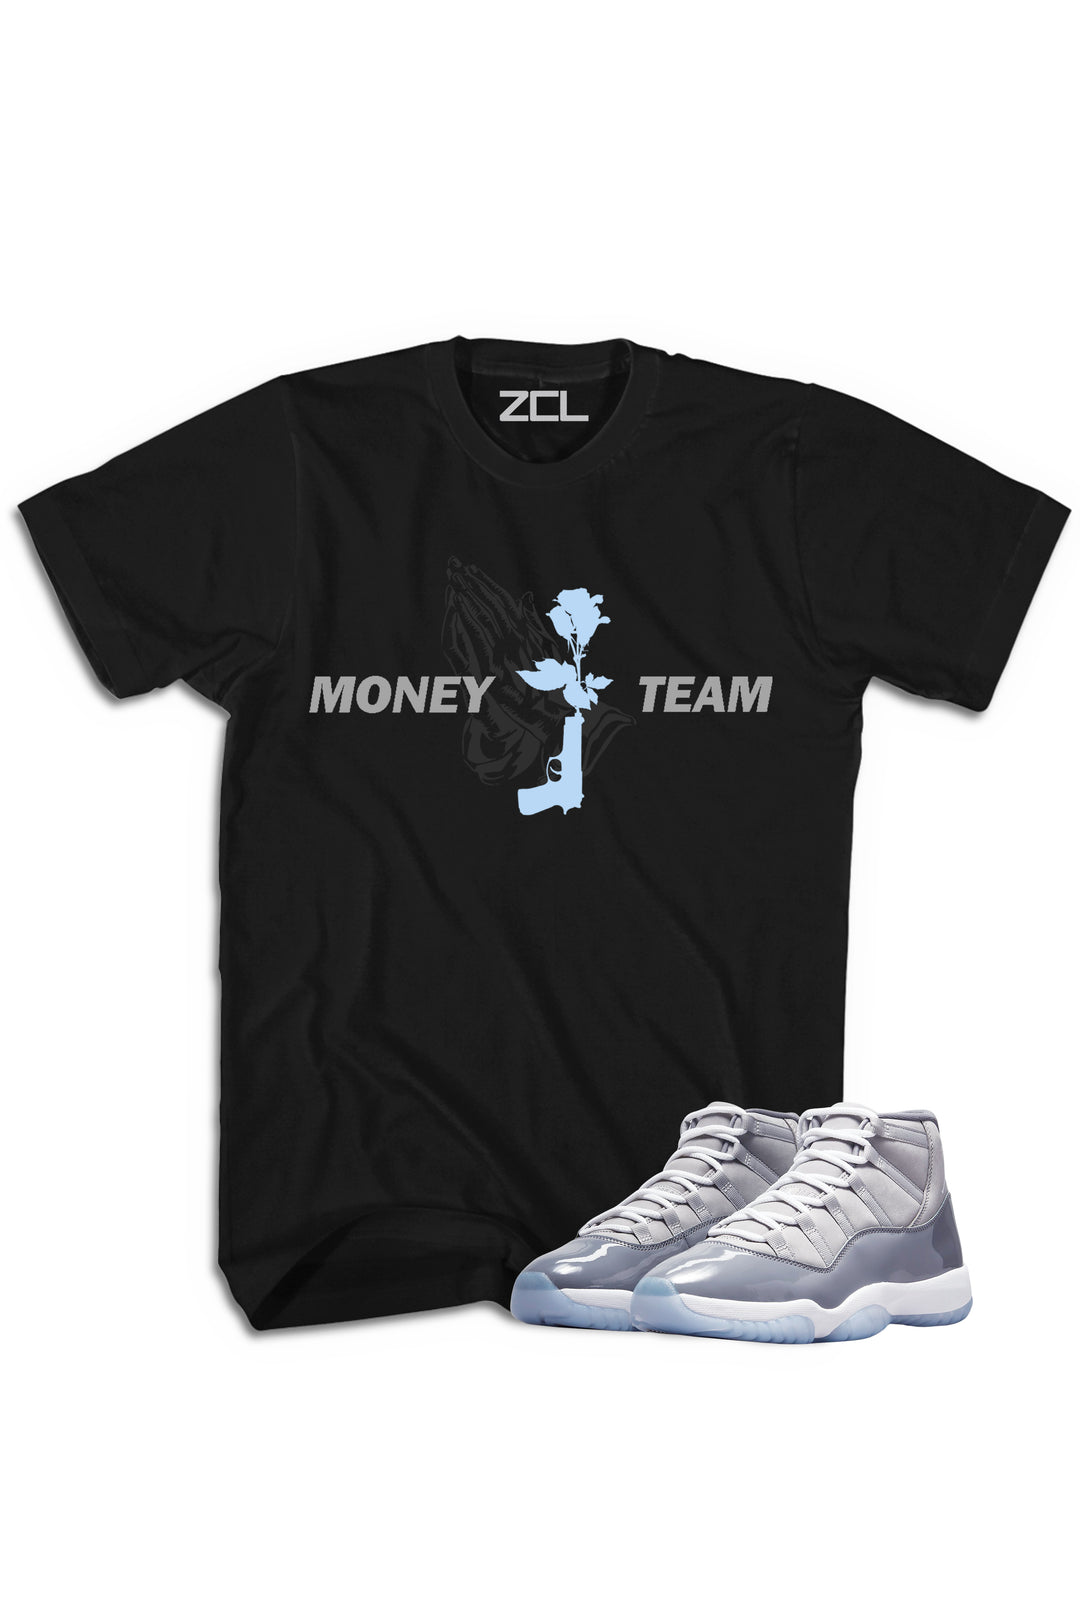 Air Jordan 11 "Money Team" Tee Cool Grey - Zamage